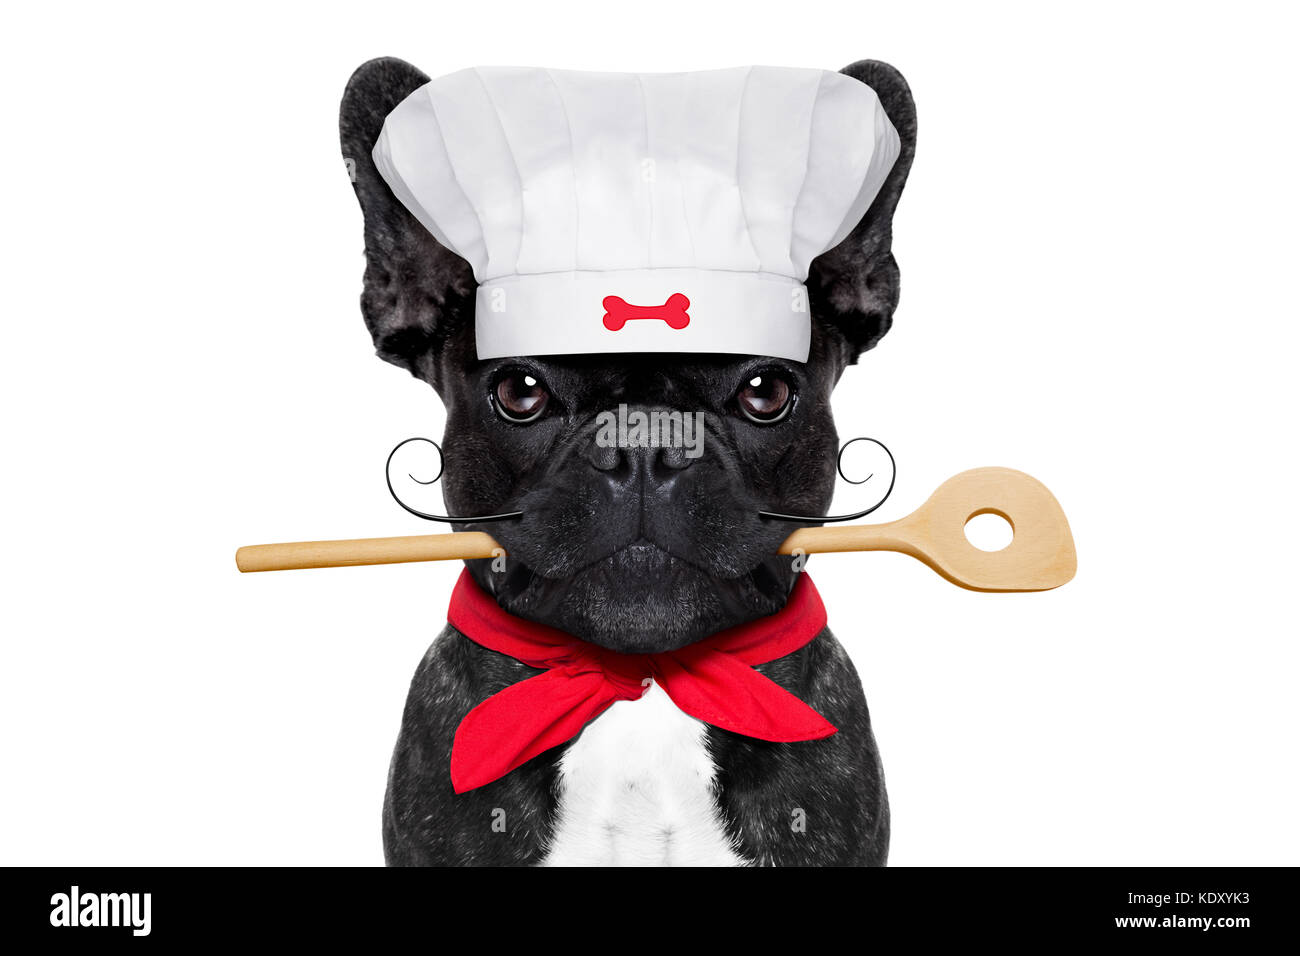 Cook Cuisine Dog Stock Photos & Cook Cuisine Dog Stock Images - Alamy